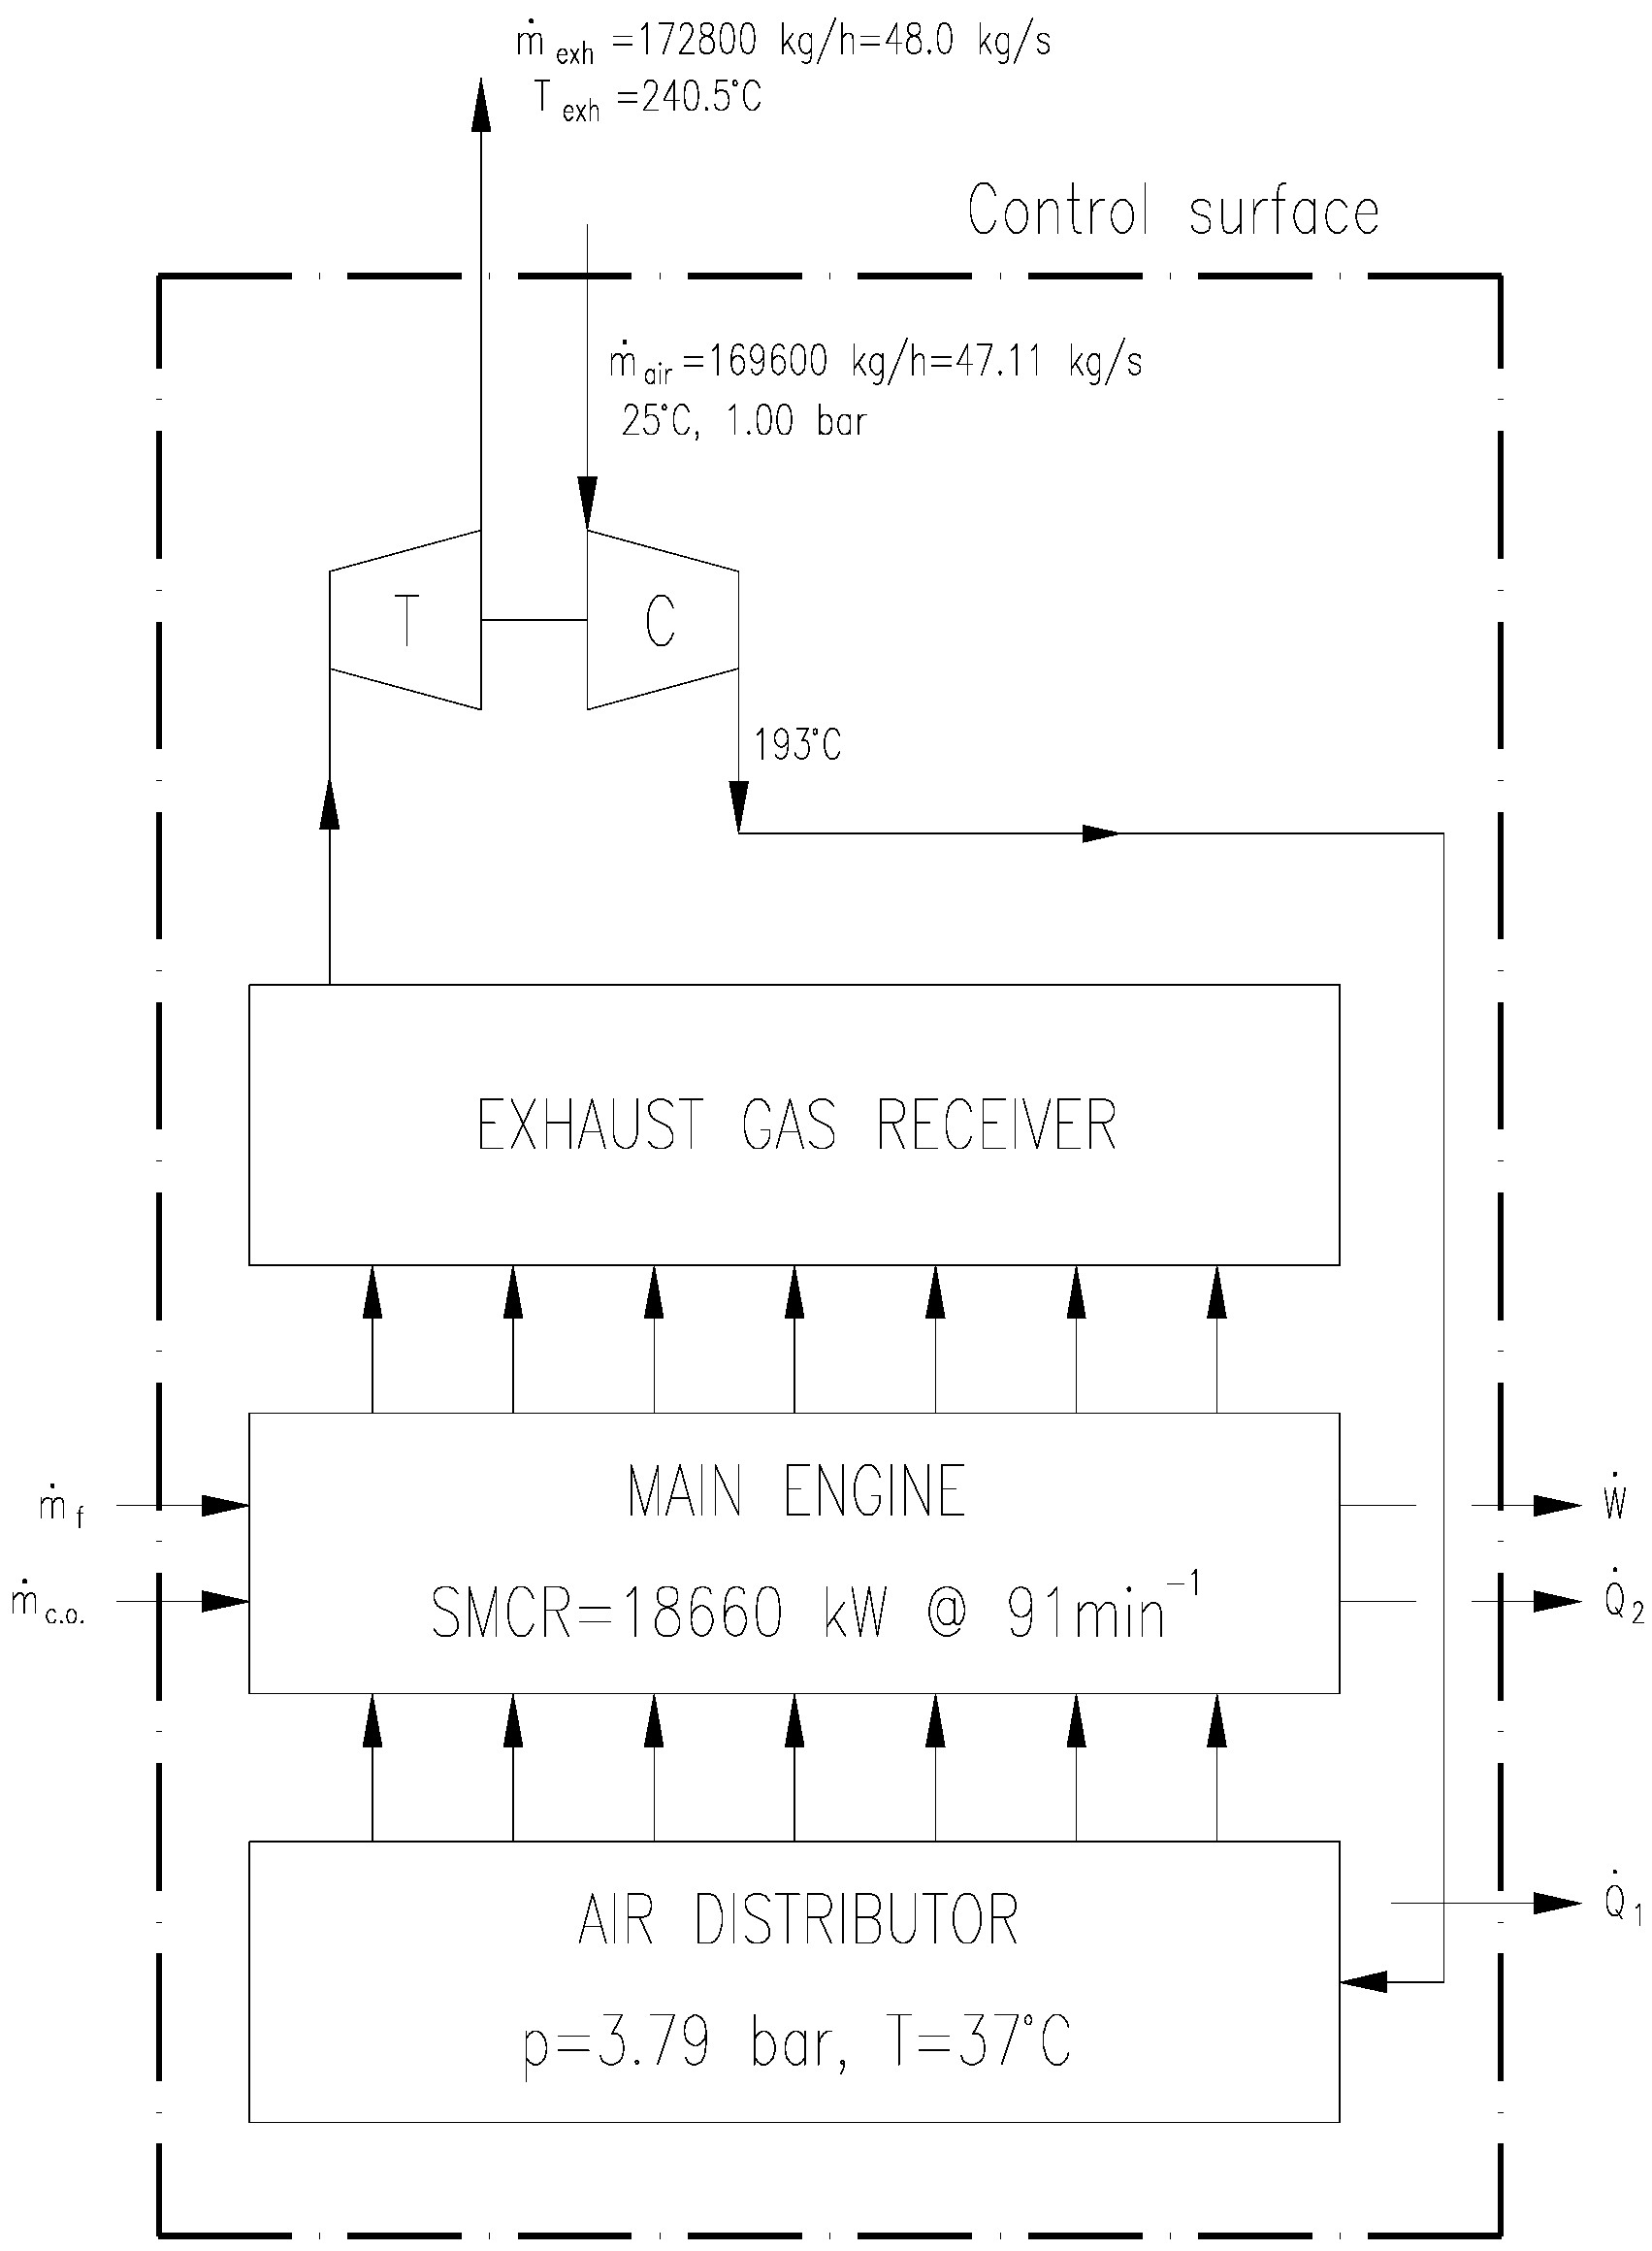 Valve Timing Diagram for 4 Stroke Petrol Engine Energies Free Full Text Of Valve Timing Diagram for 4 Stroke Petrol Engine